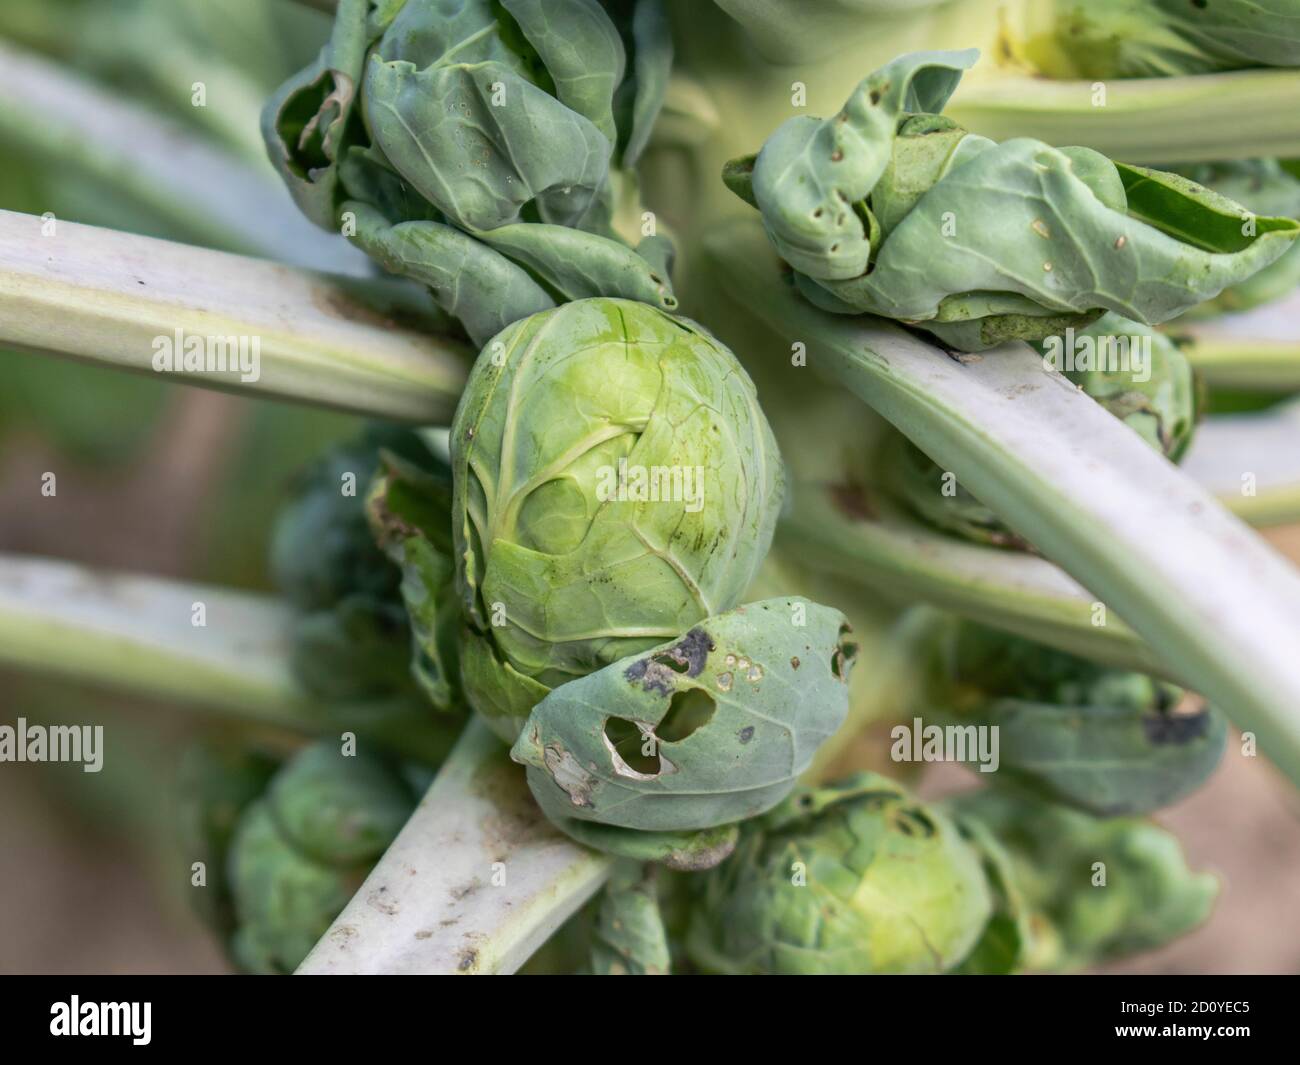 Brussels Sprouts , disease and holes in leaves damage, Brassica oleracea var. gemmifera Stock Photo